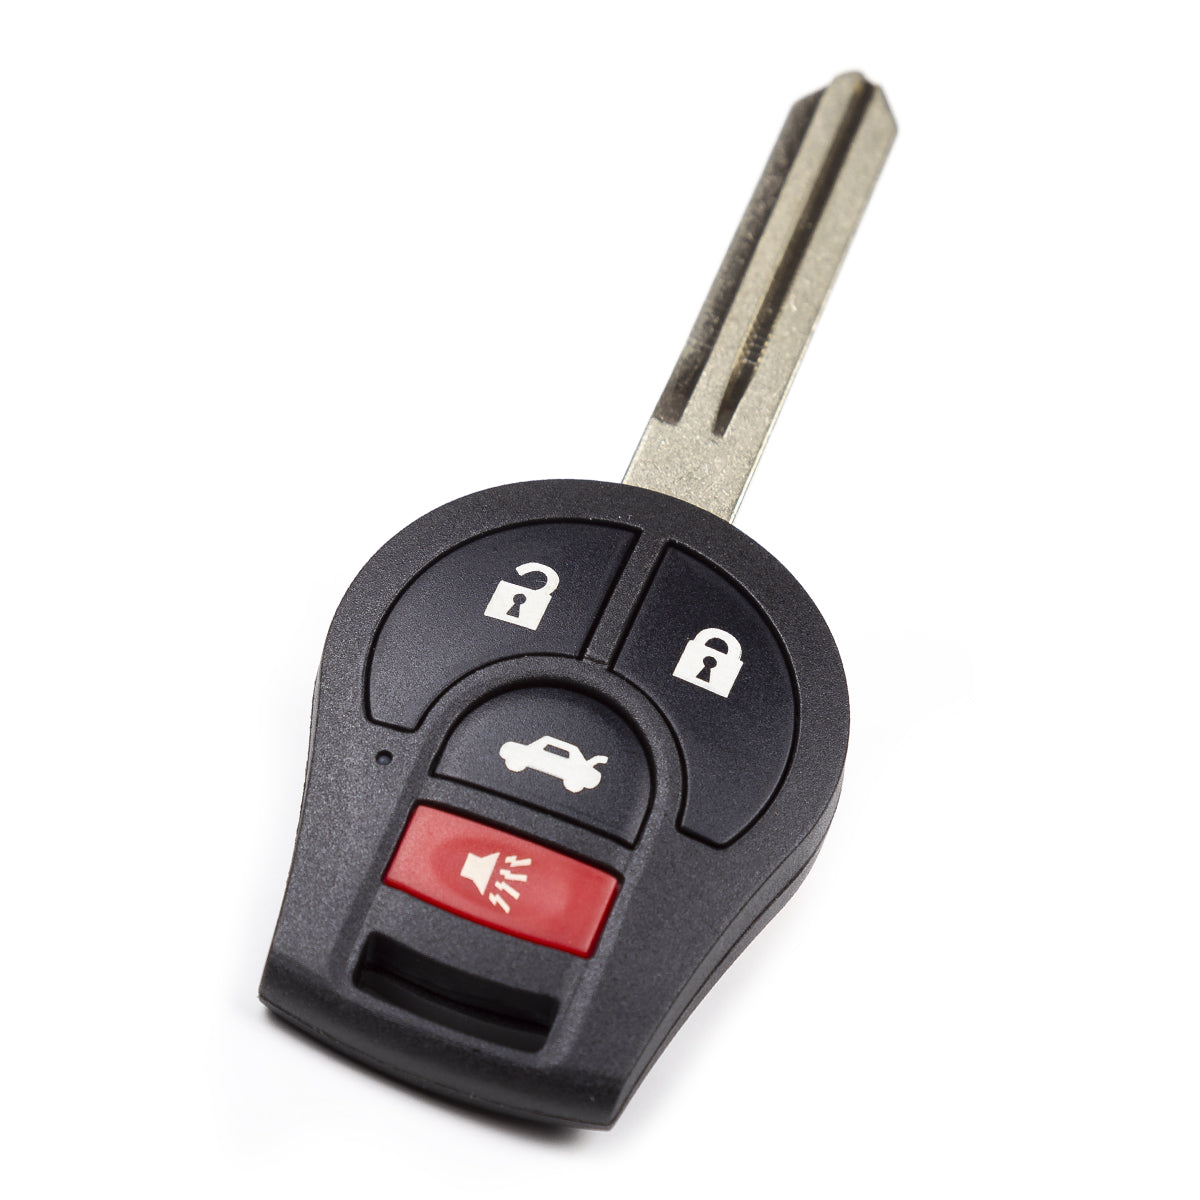 2007 Nissan Maxima Key Fob - Aftermarket - 4 Buttons Fob FCC# CWTWB1U751 - ID46 Chip